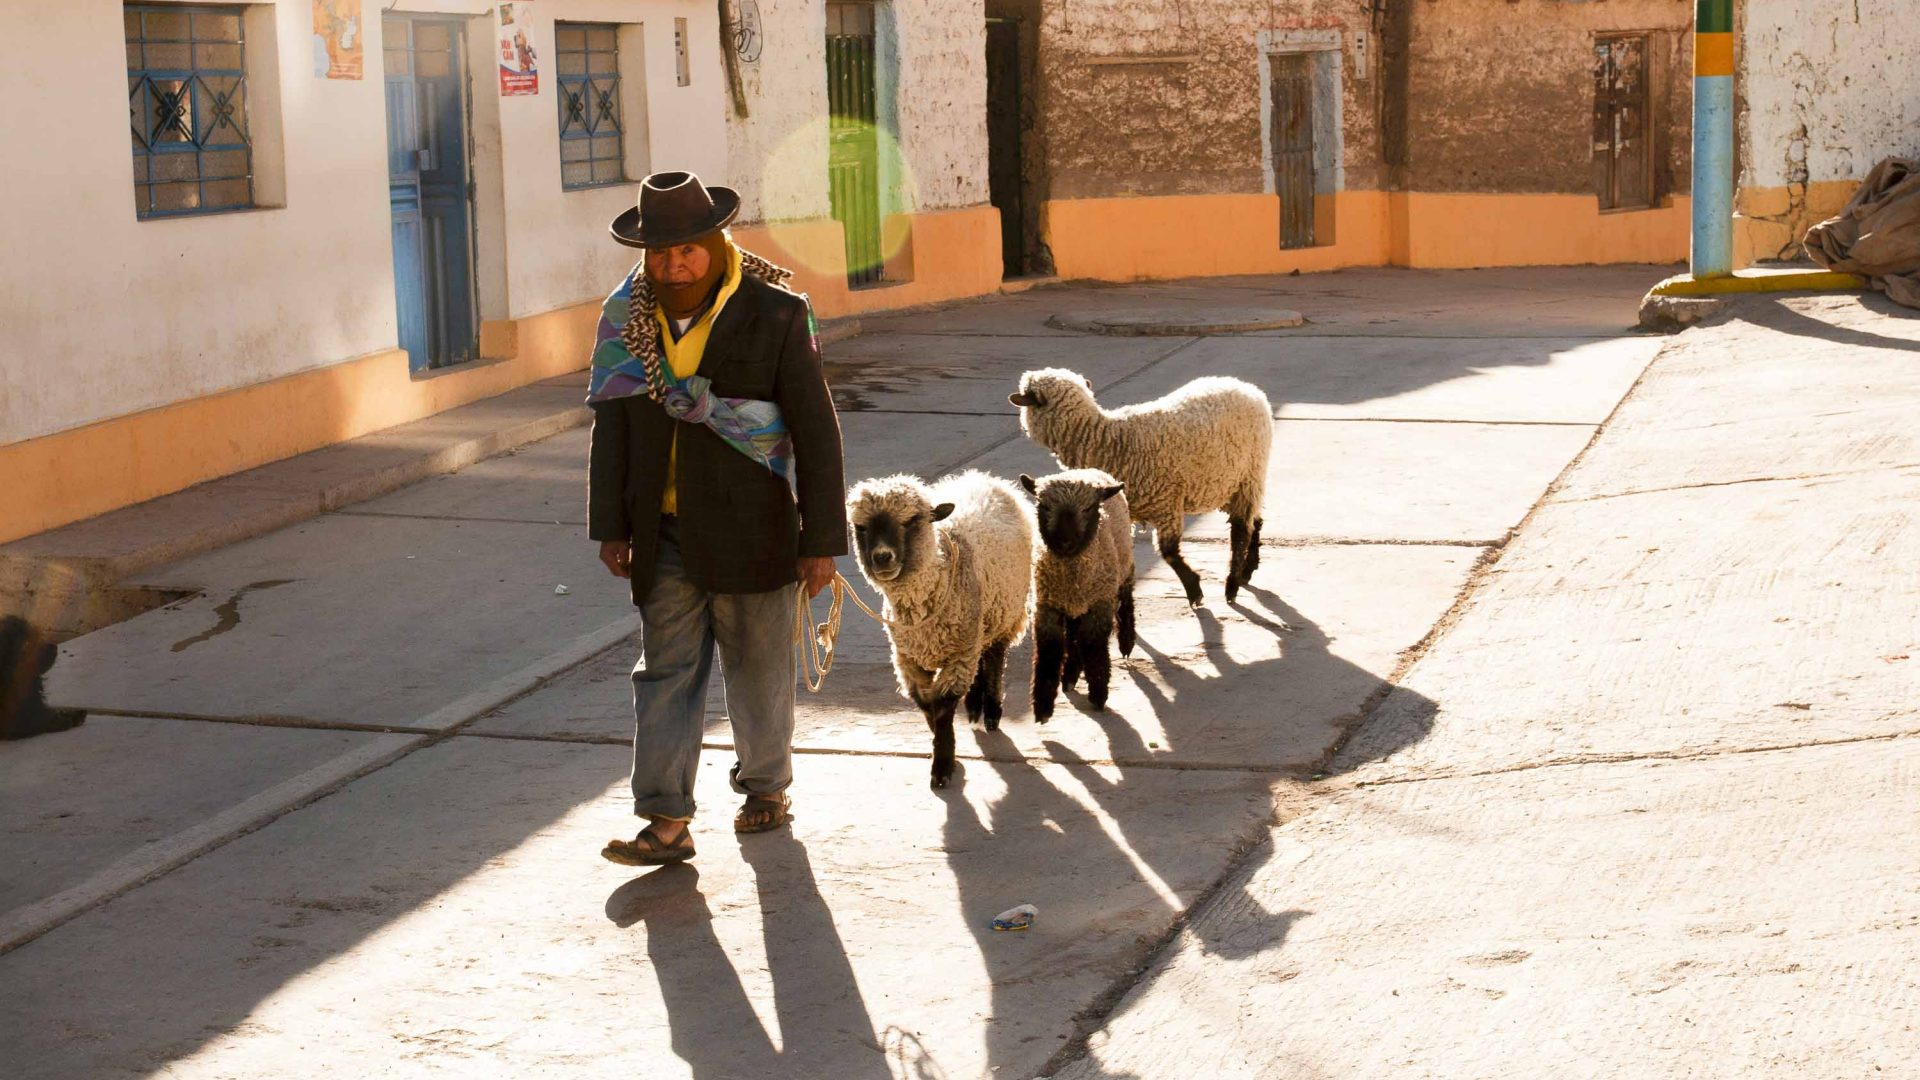 A man walks down the street followed by sheep.